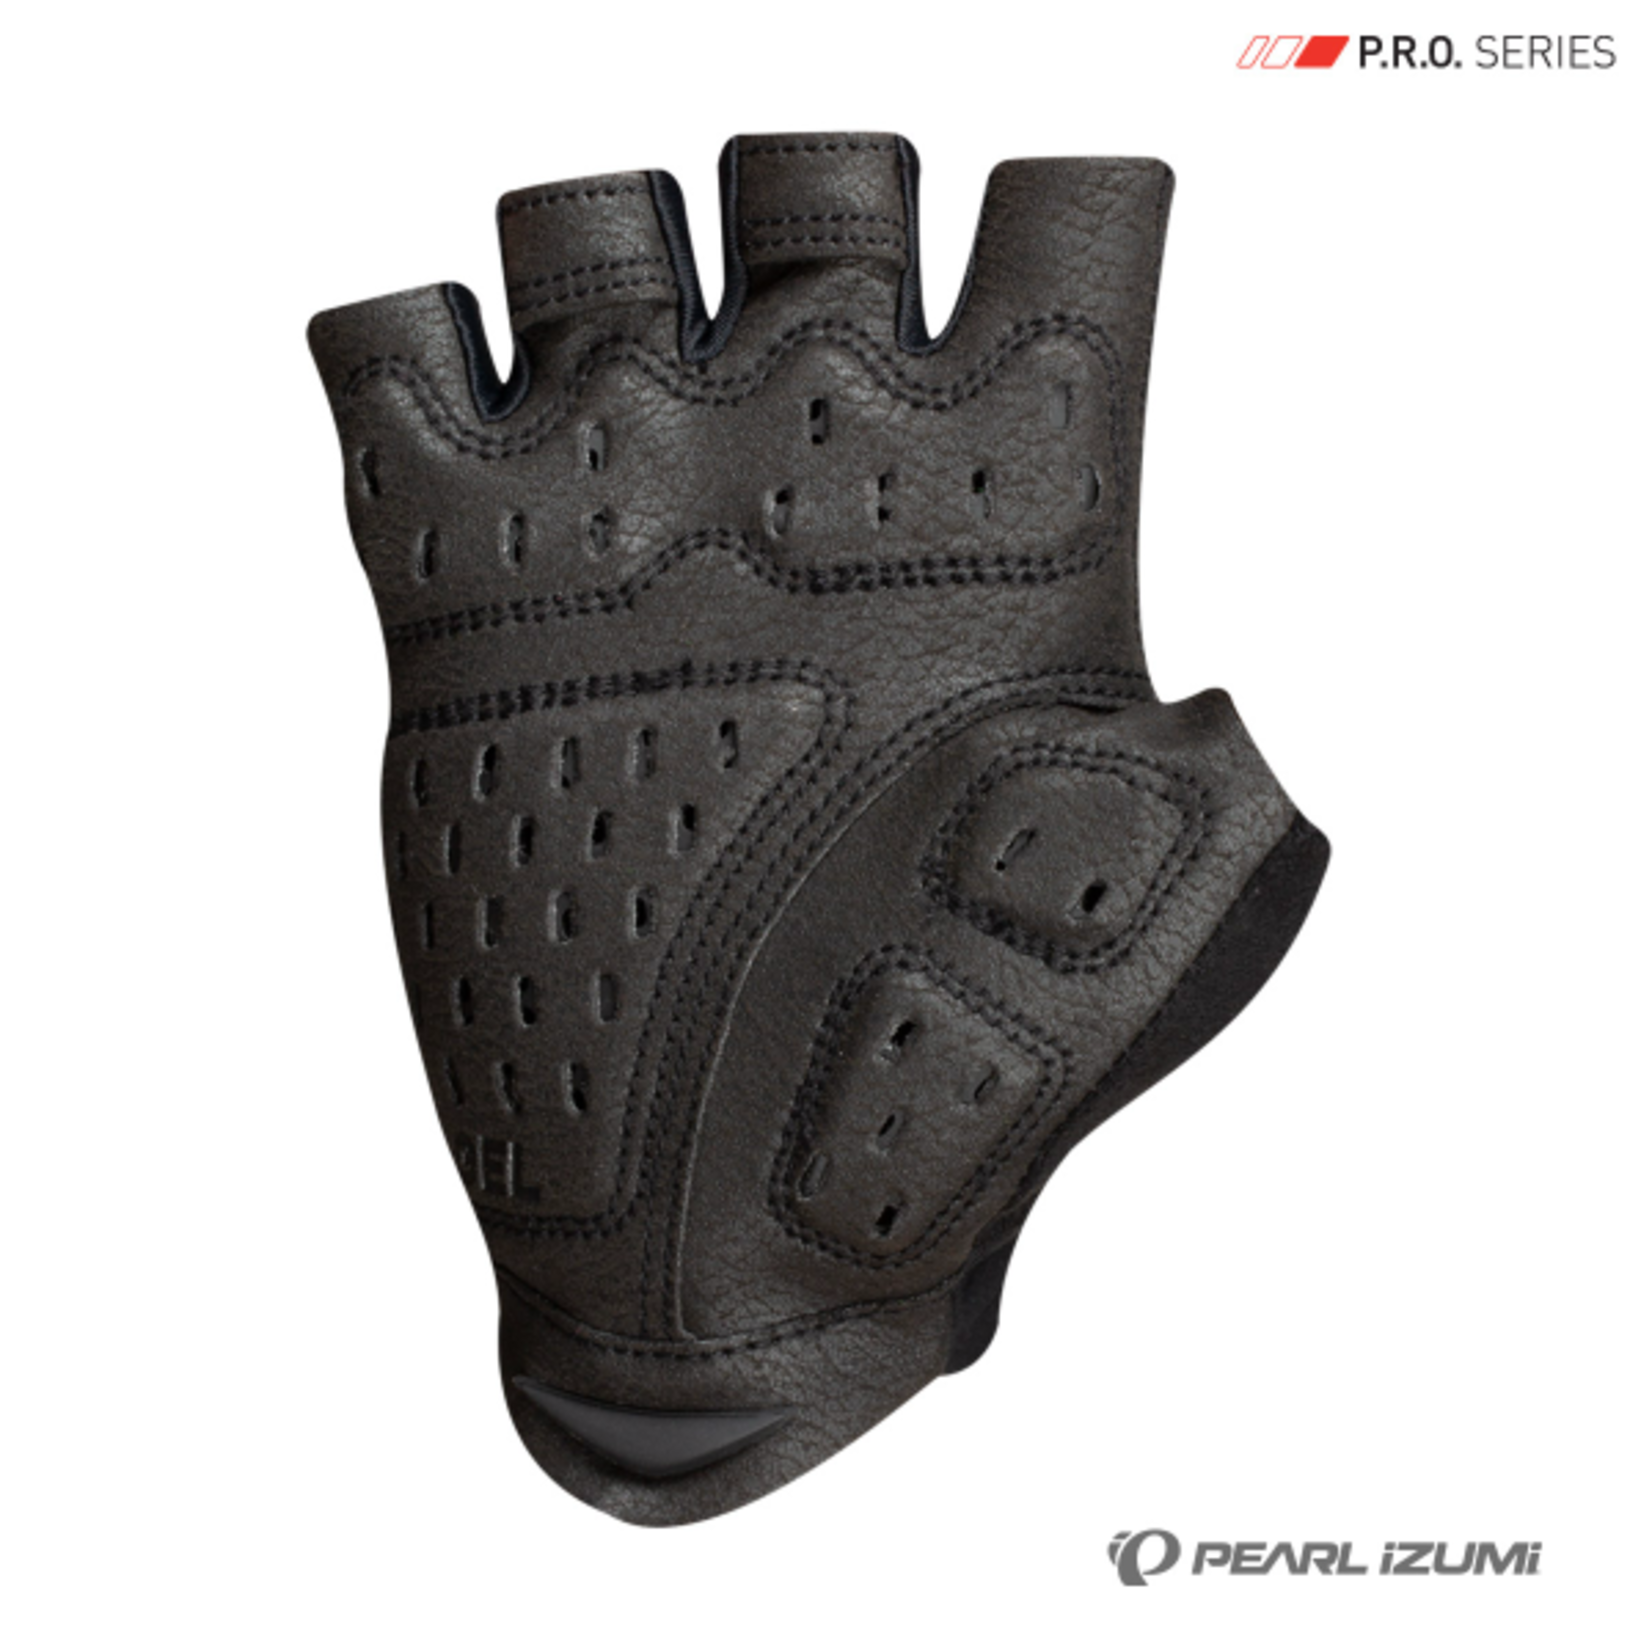 Pearl Izumi Pearl Izumi Women's Pro Gel Fingerless Cycling Gloves